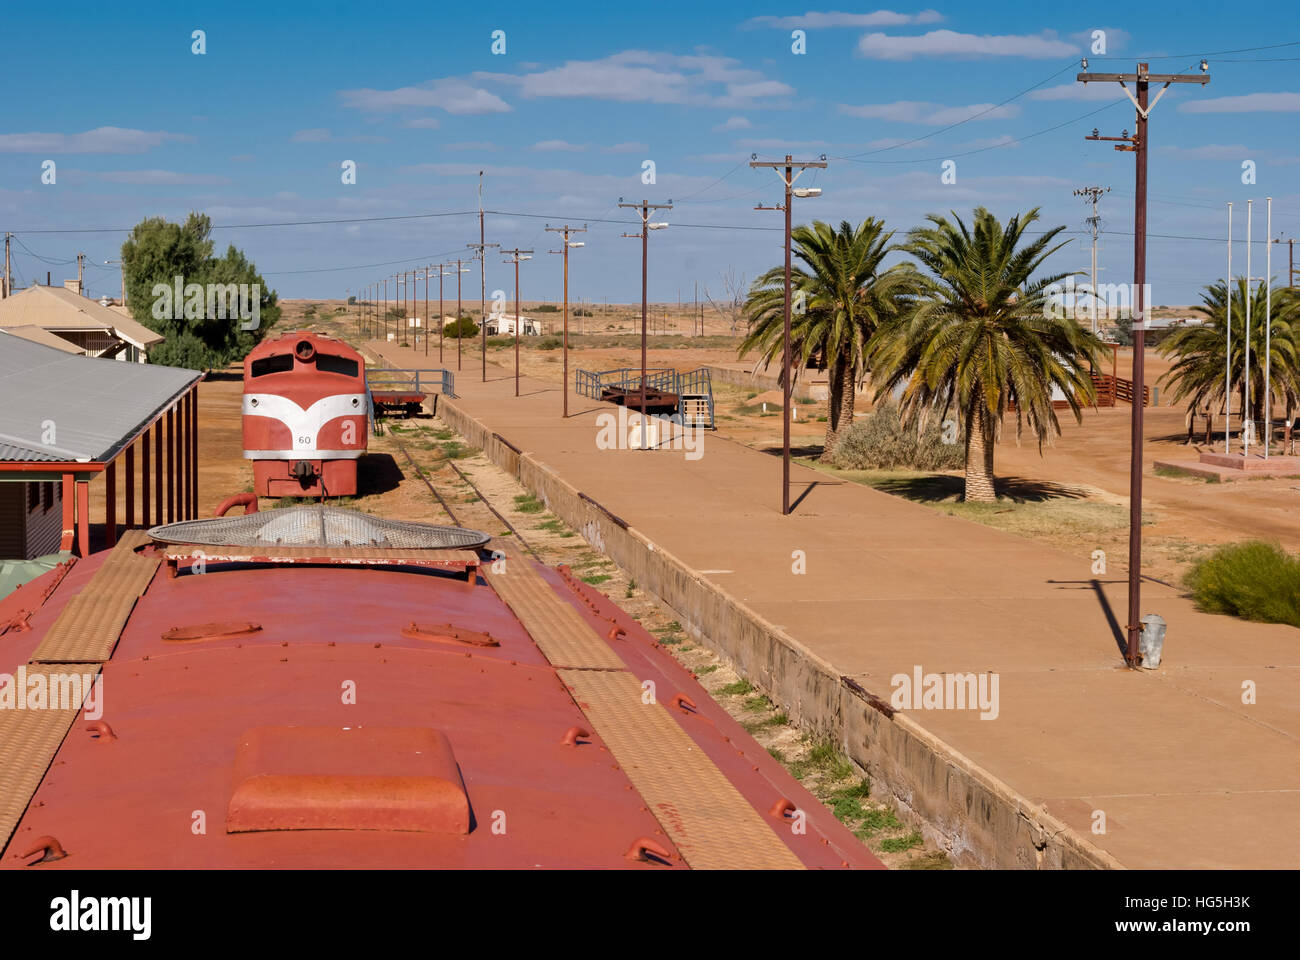 Abandoned train in Marree, South Australia Stock Photo